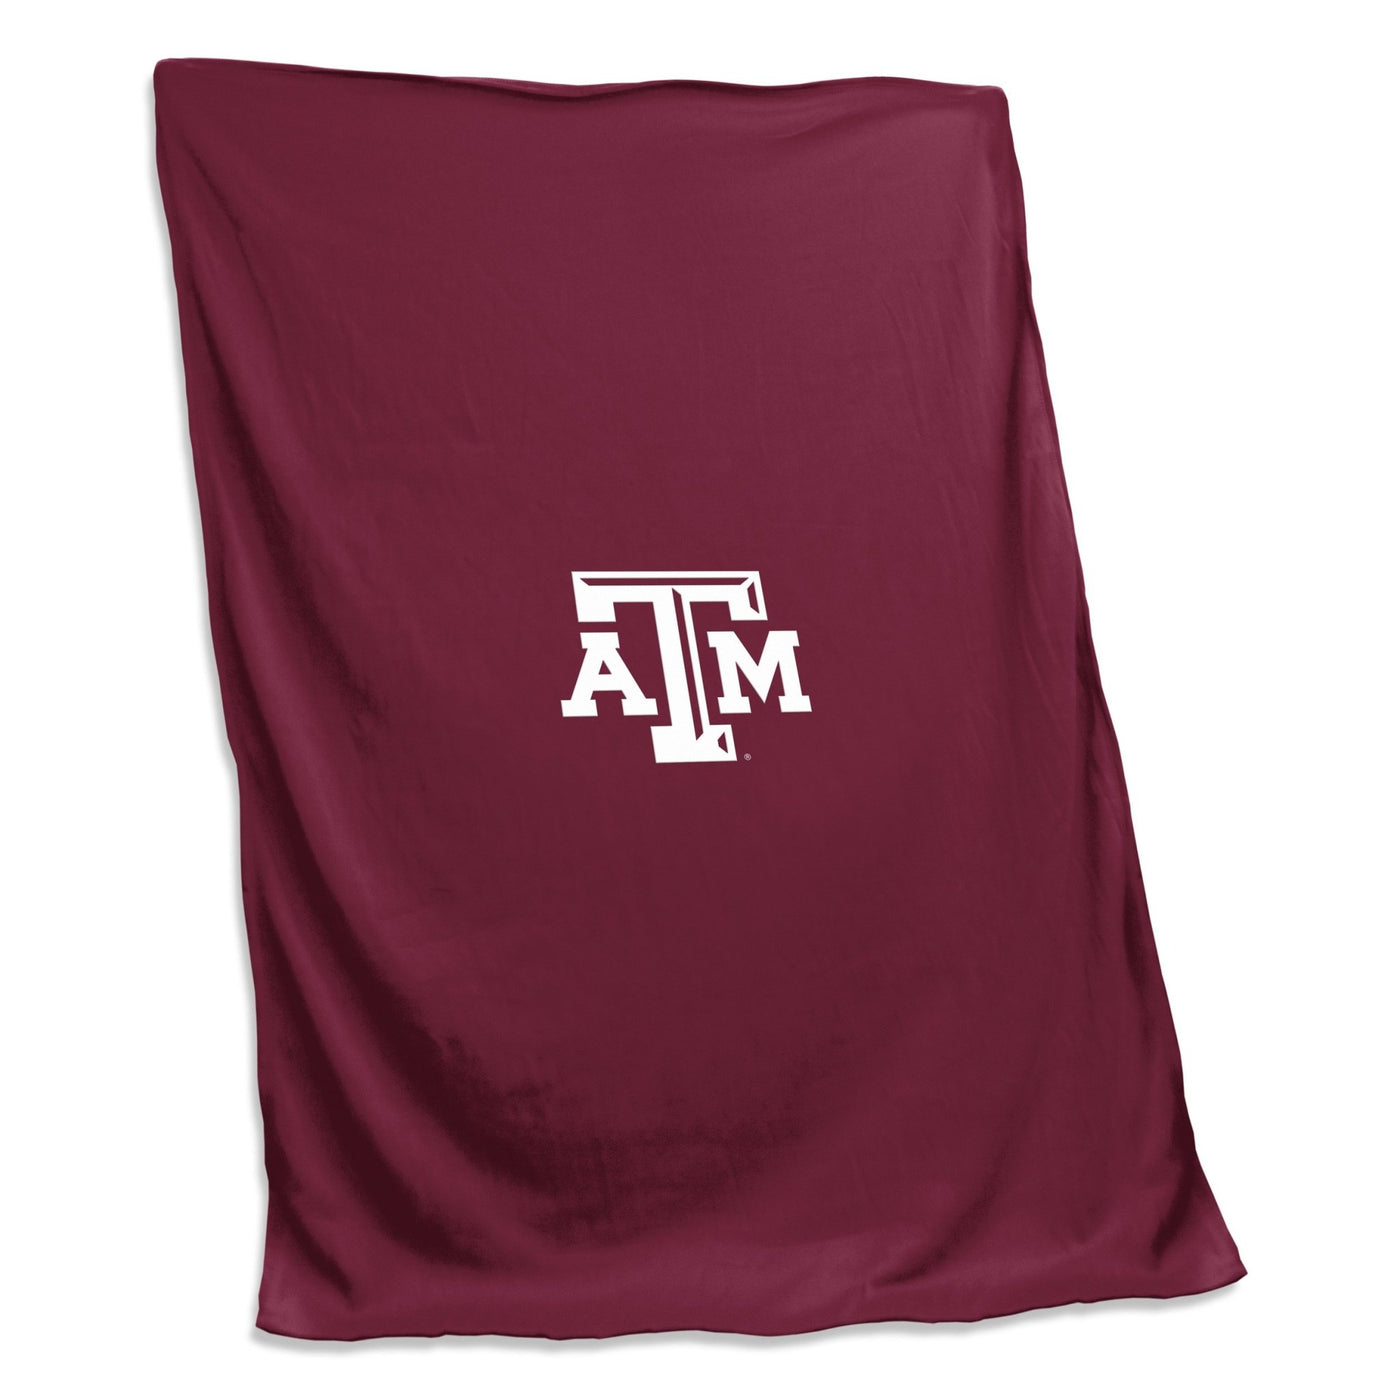 TX A&M Sweatshirt Blanket - Logo Brands